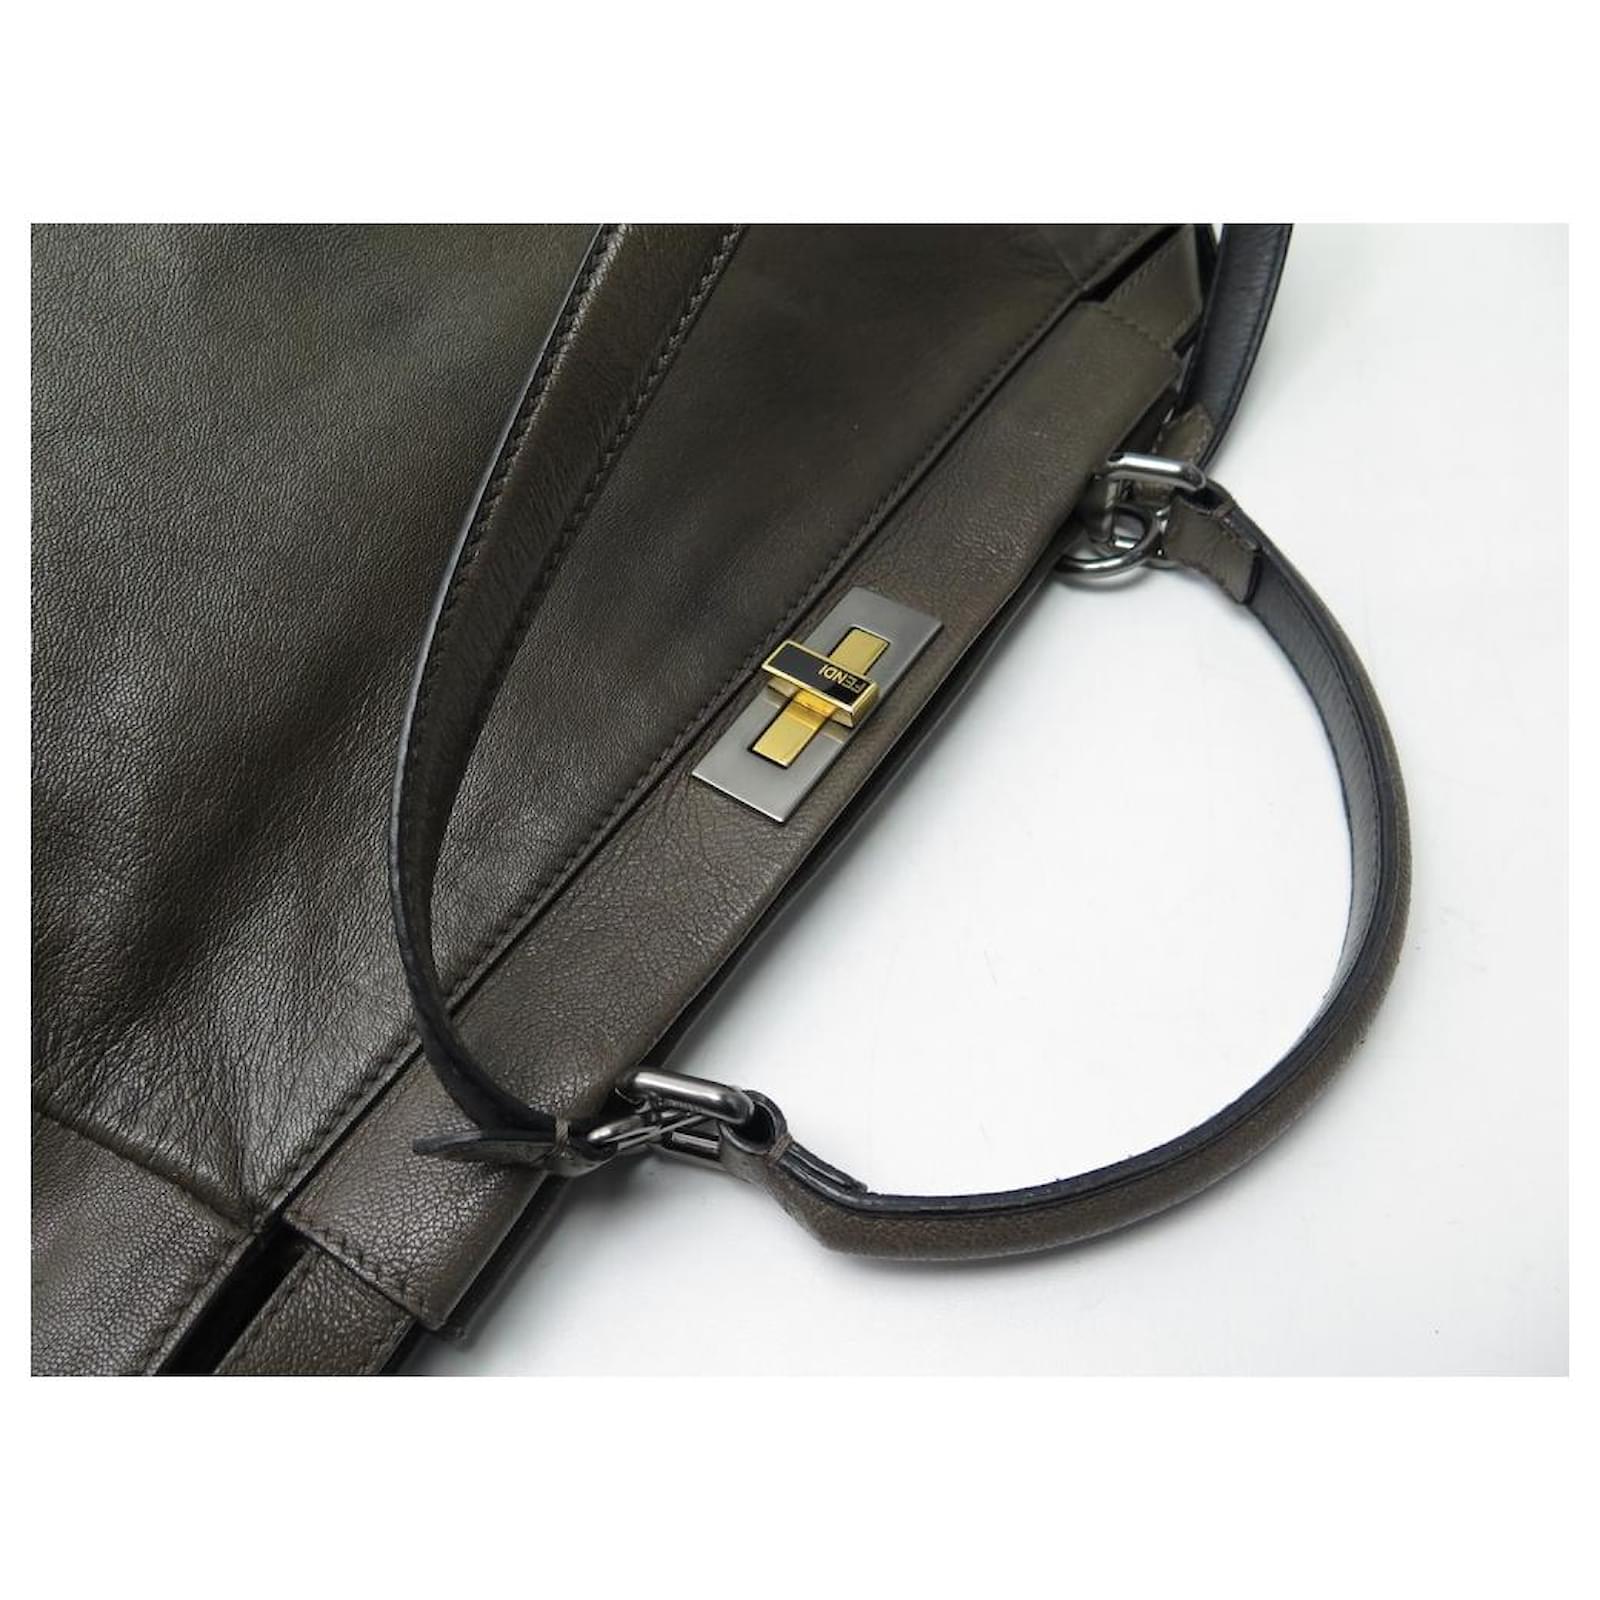 Fendi Black Leather Large Peekaboo Satchel Bag - 8Bn210